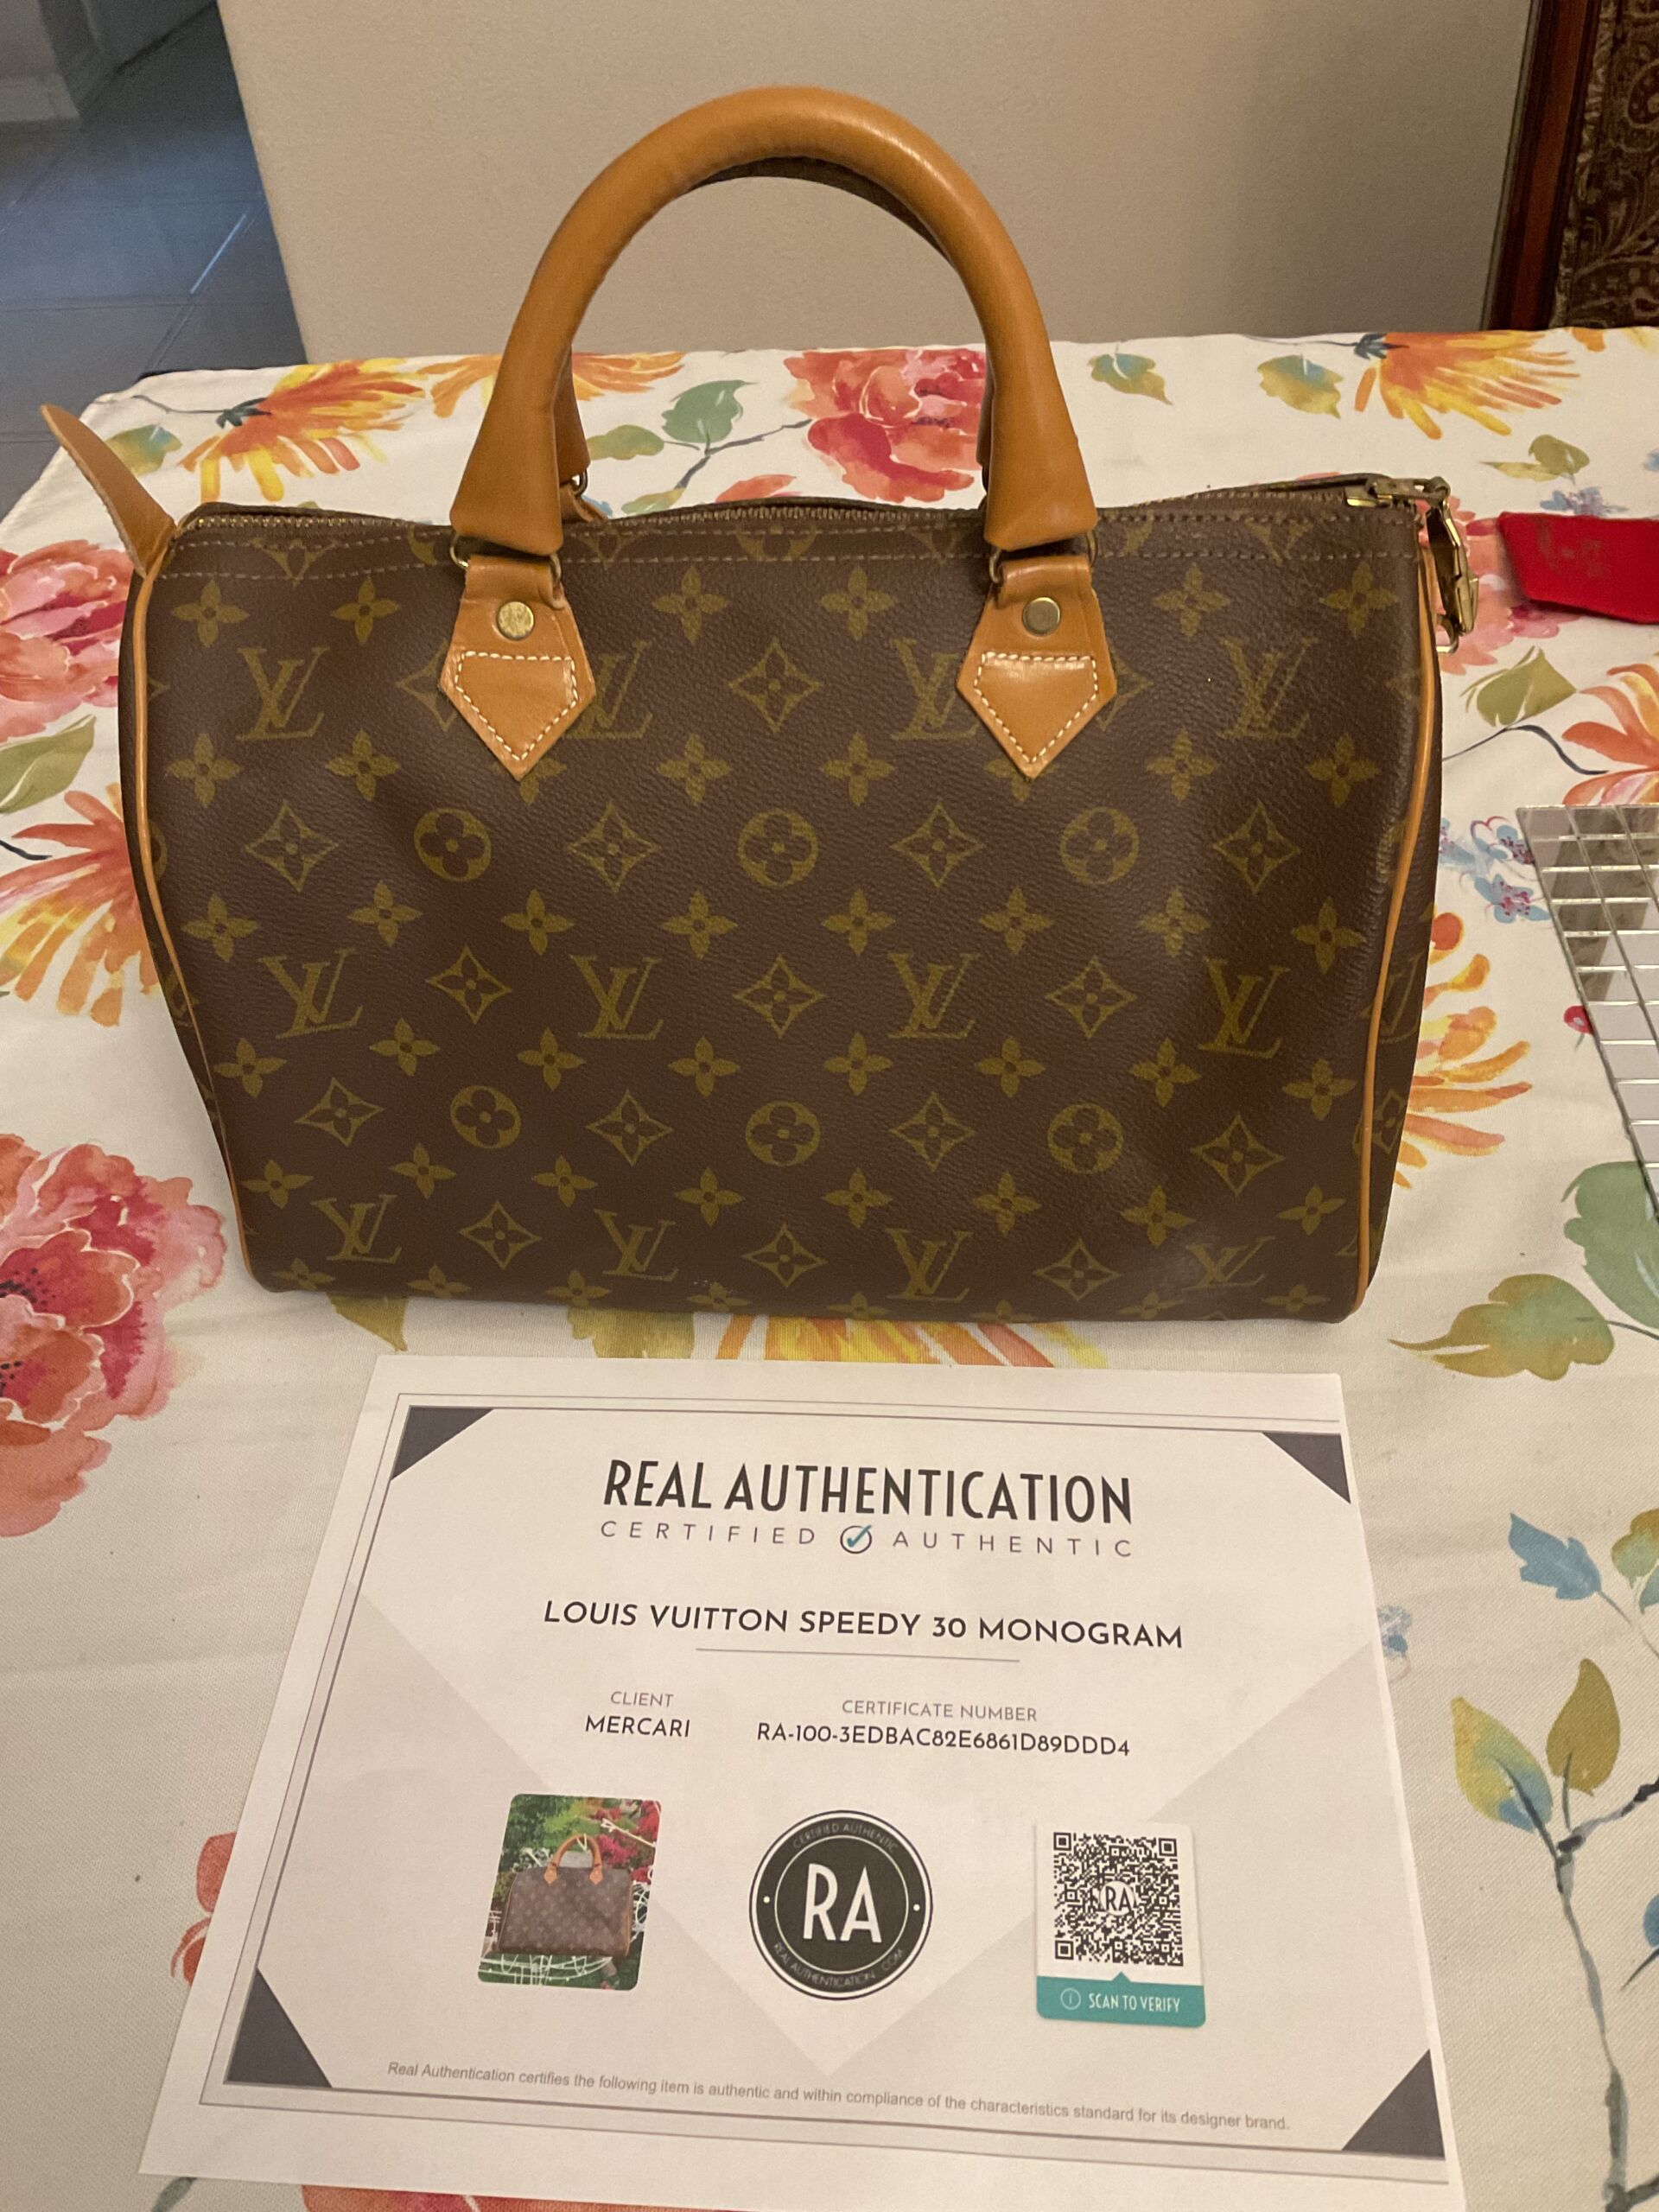 Louis Vuitton Speedy 30 Monogram Handbag From The 80’s